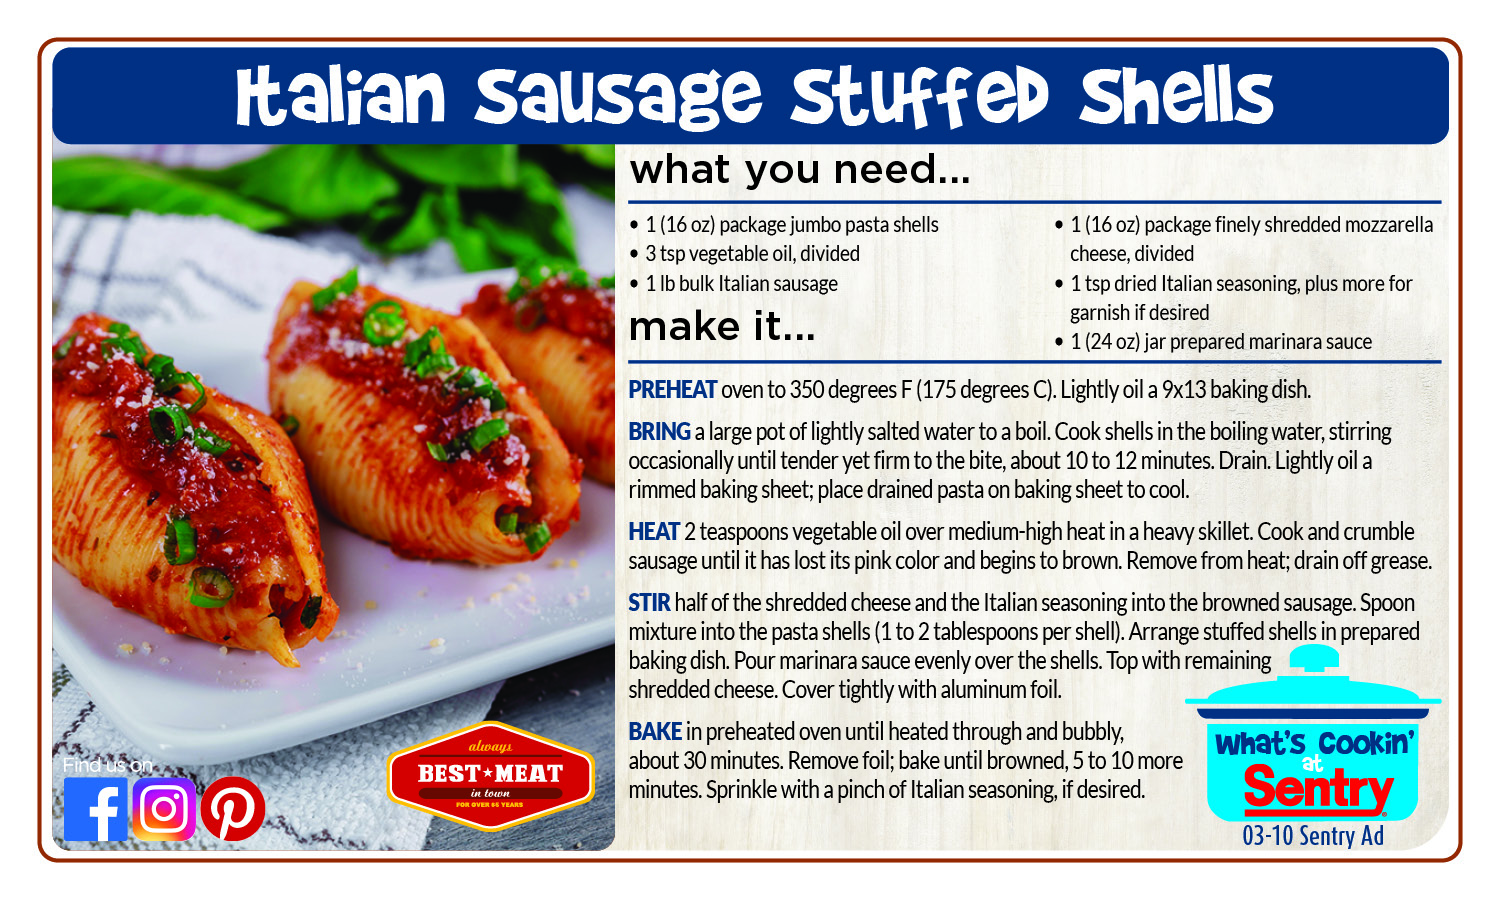 Recipe Card for Italian Sausage Stuffed Shells